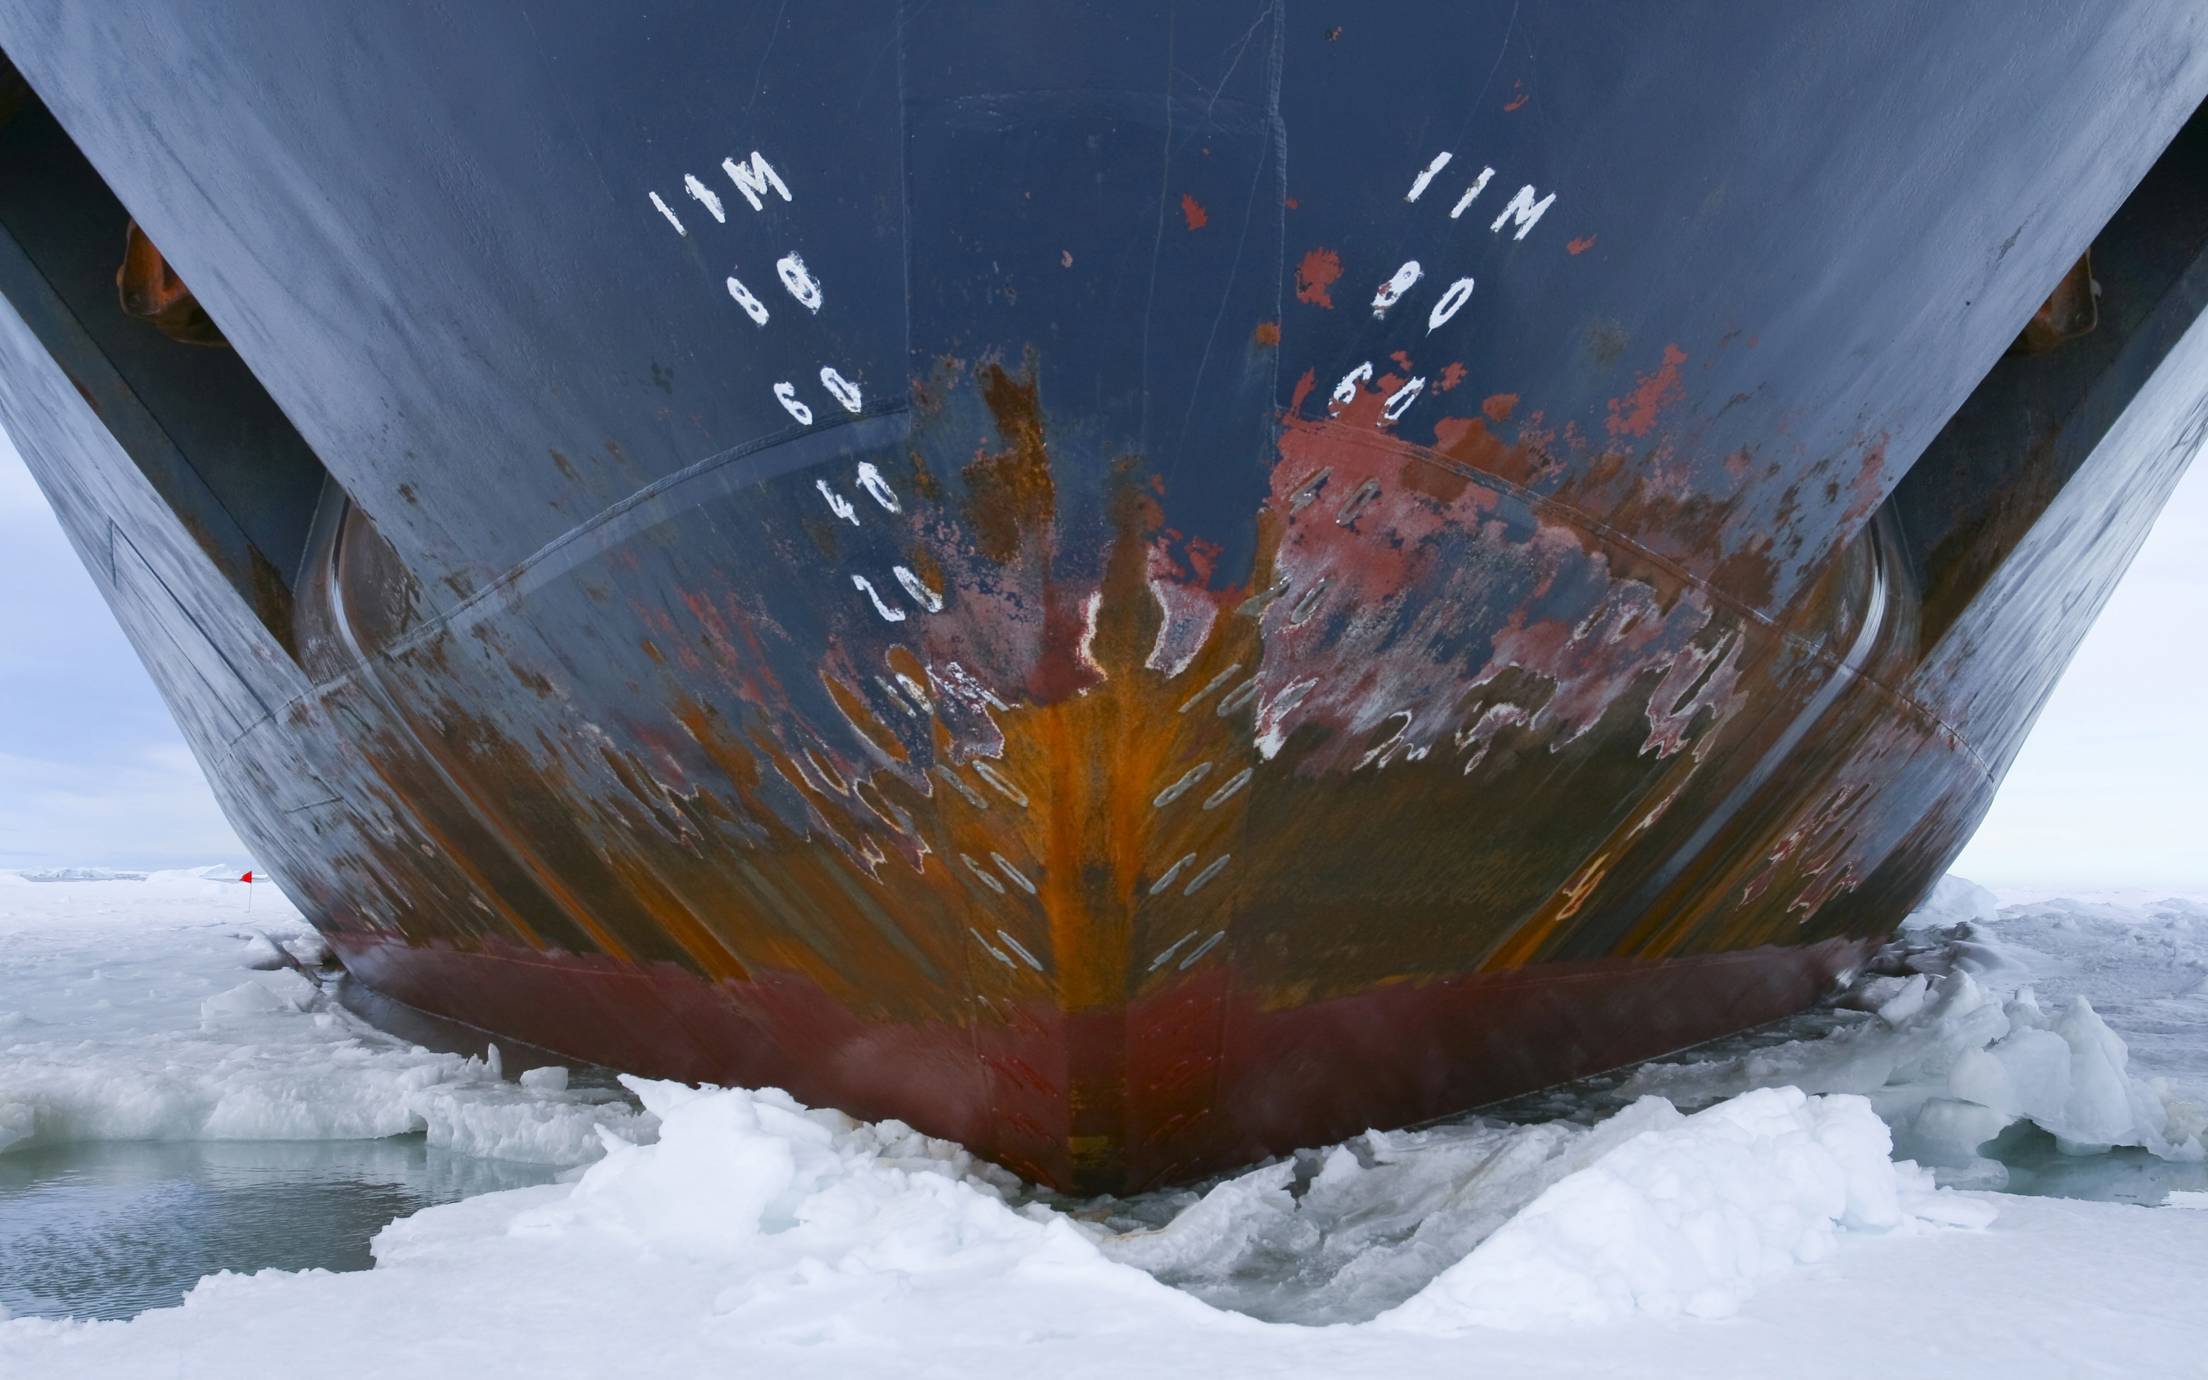 Hull of an icebreaker